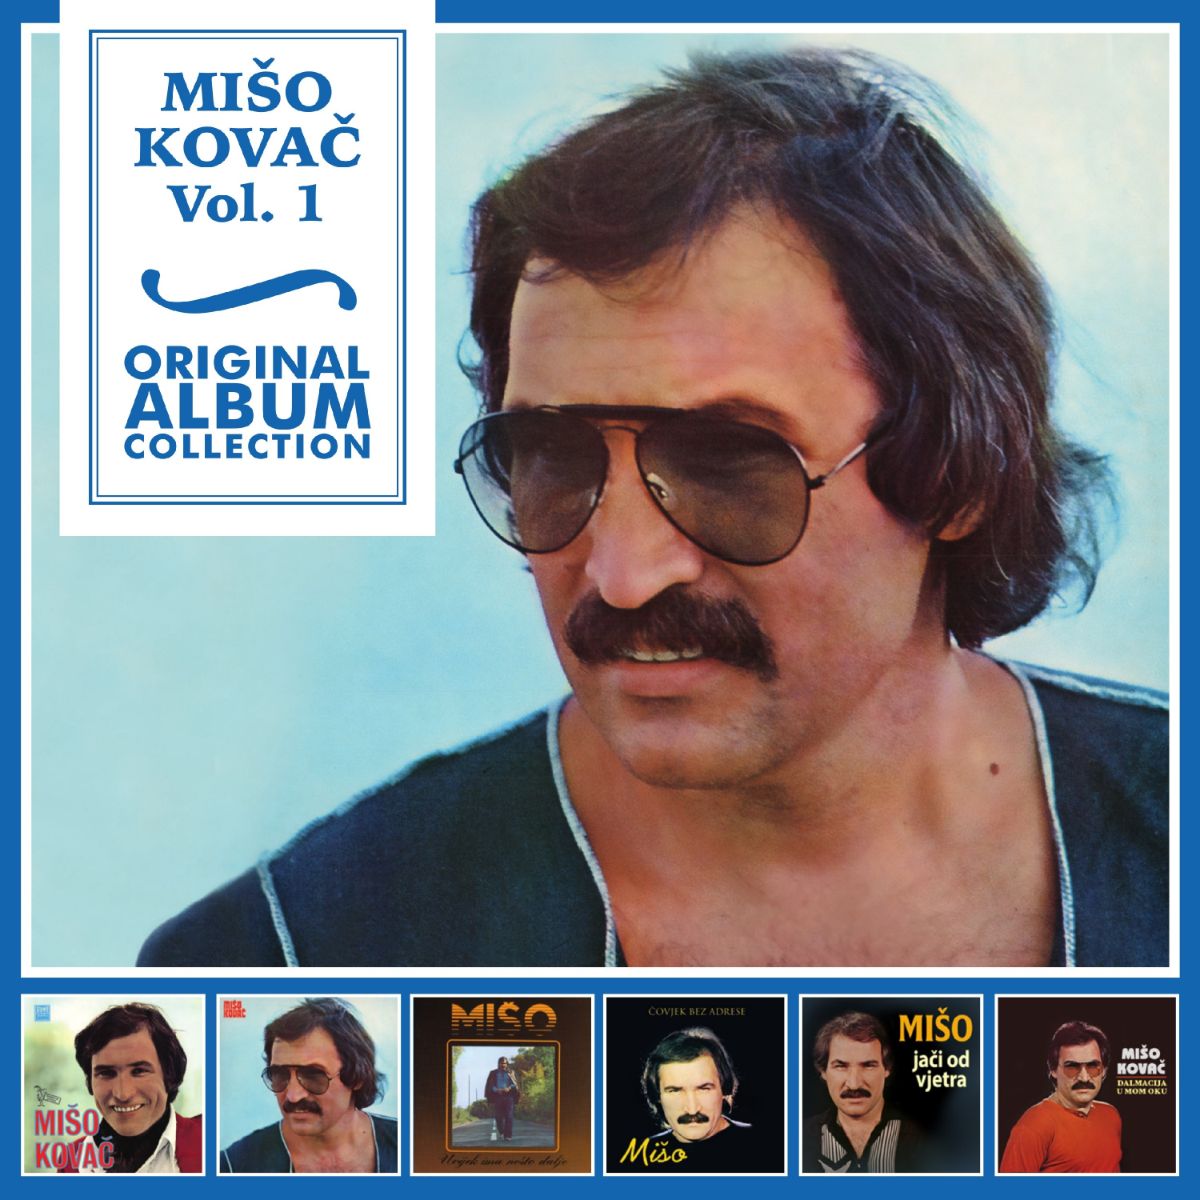 Objavljen “Original Album Collection Vol. 1” Miše Kovača